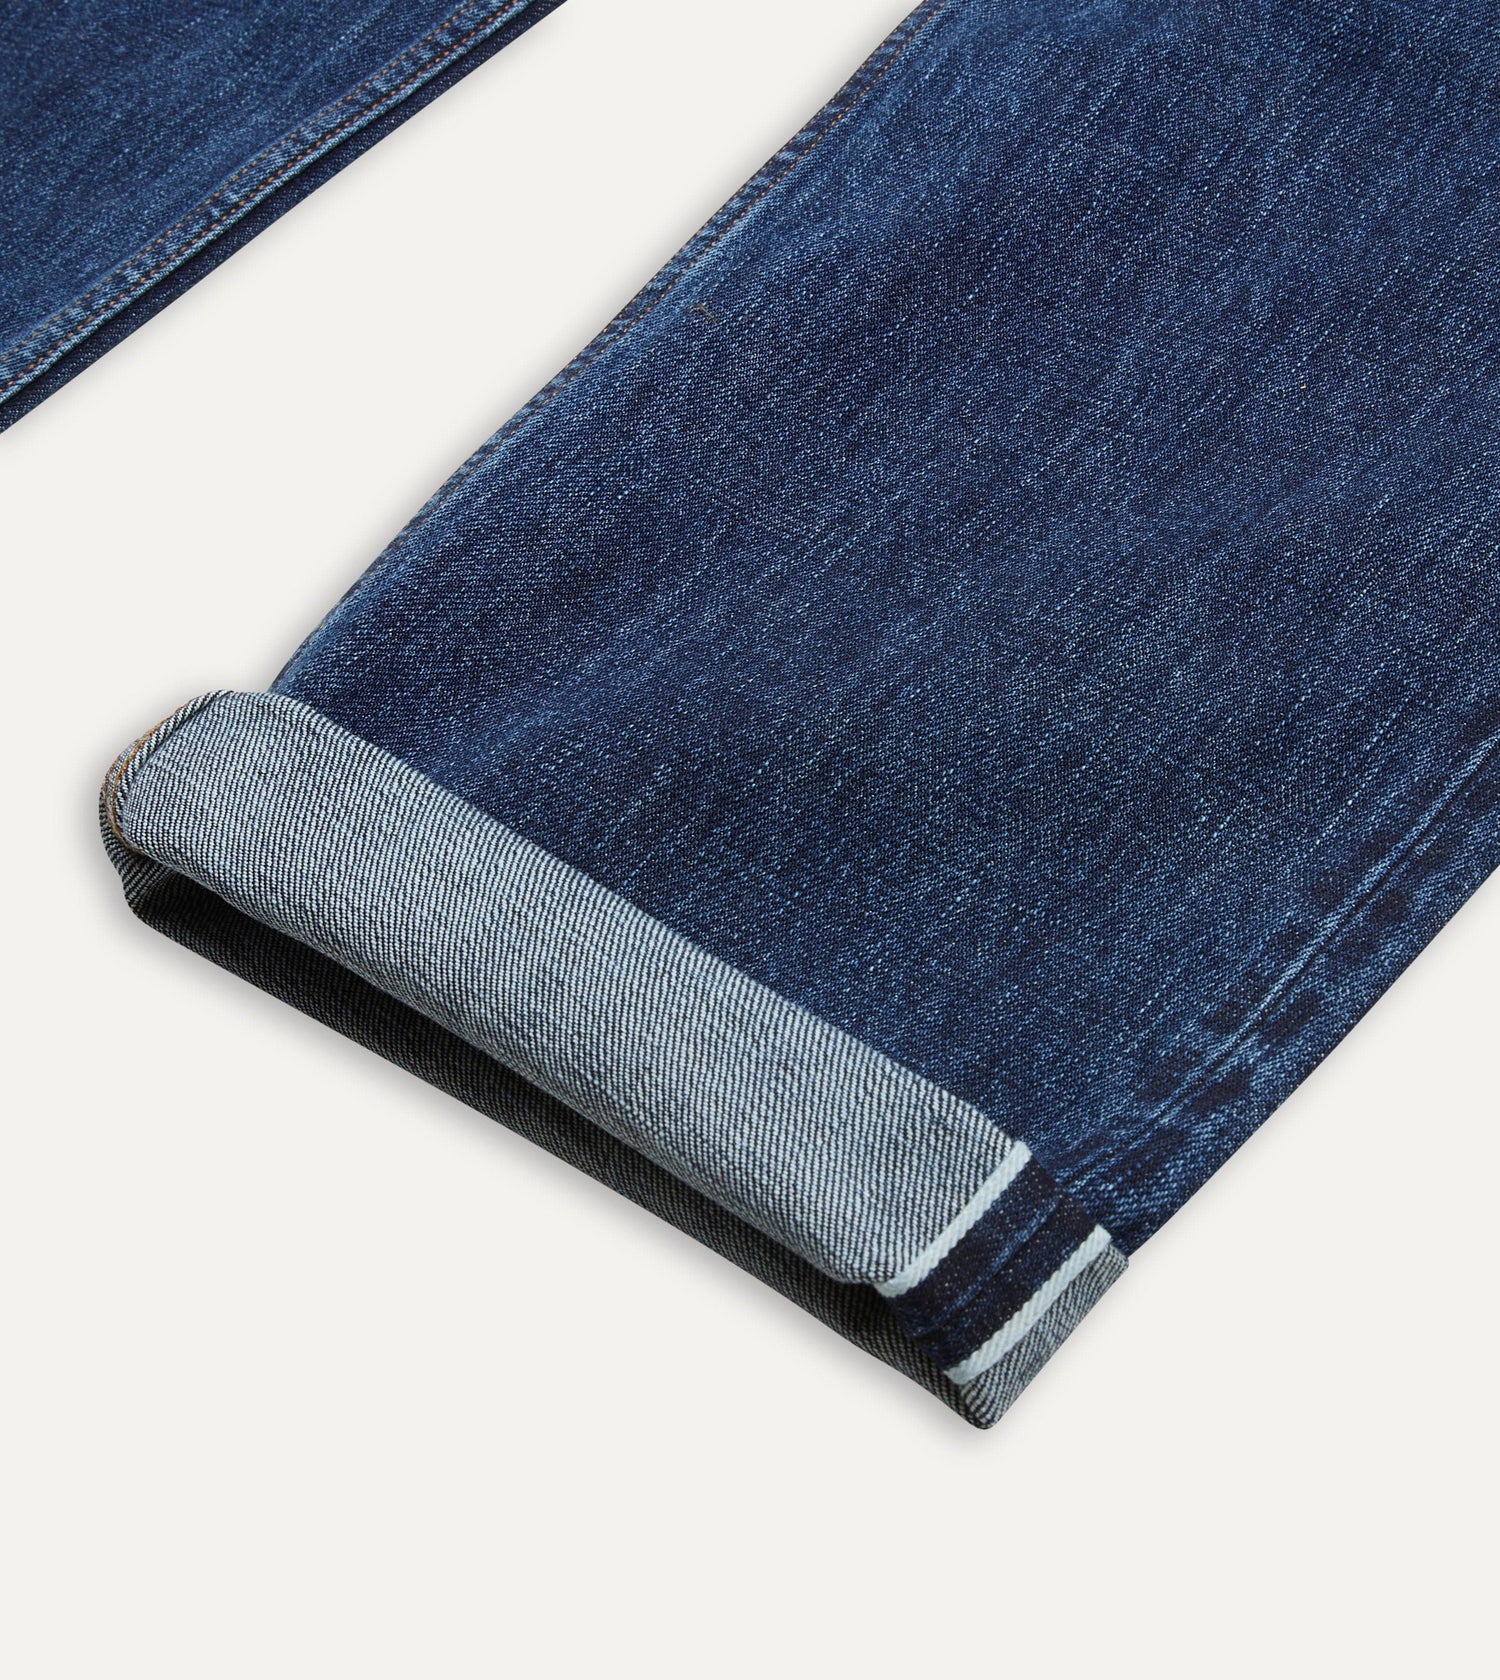 Stone Wash 14.2oz Japanese Selvedge Denim Five-Pocket Jeans